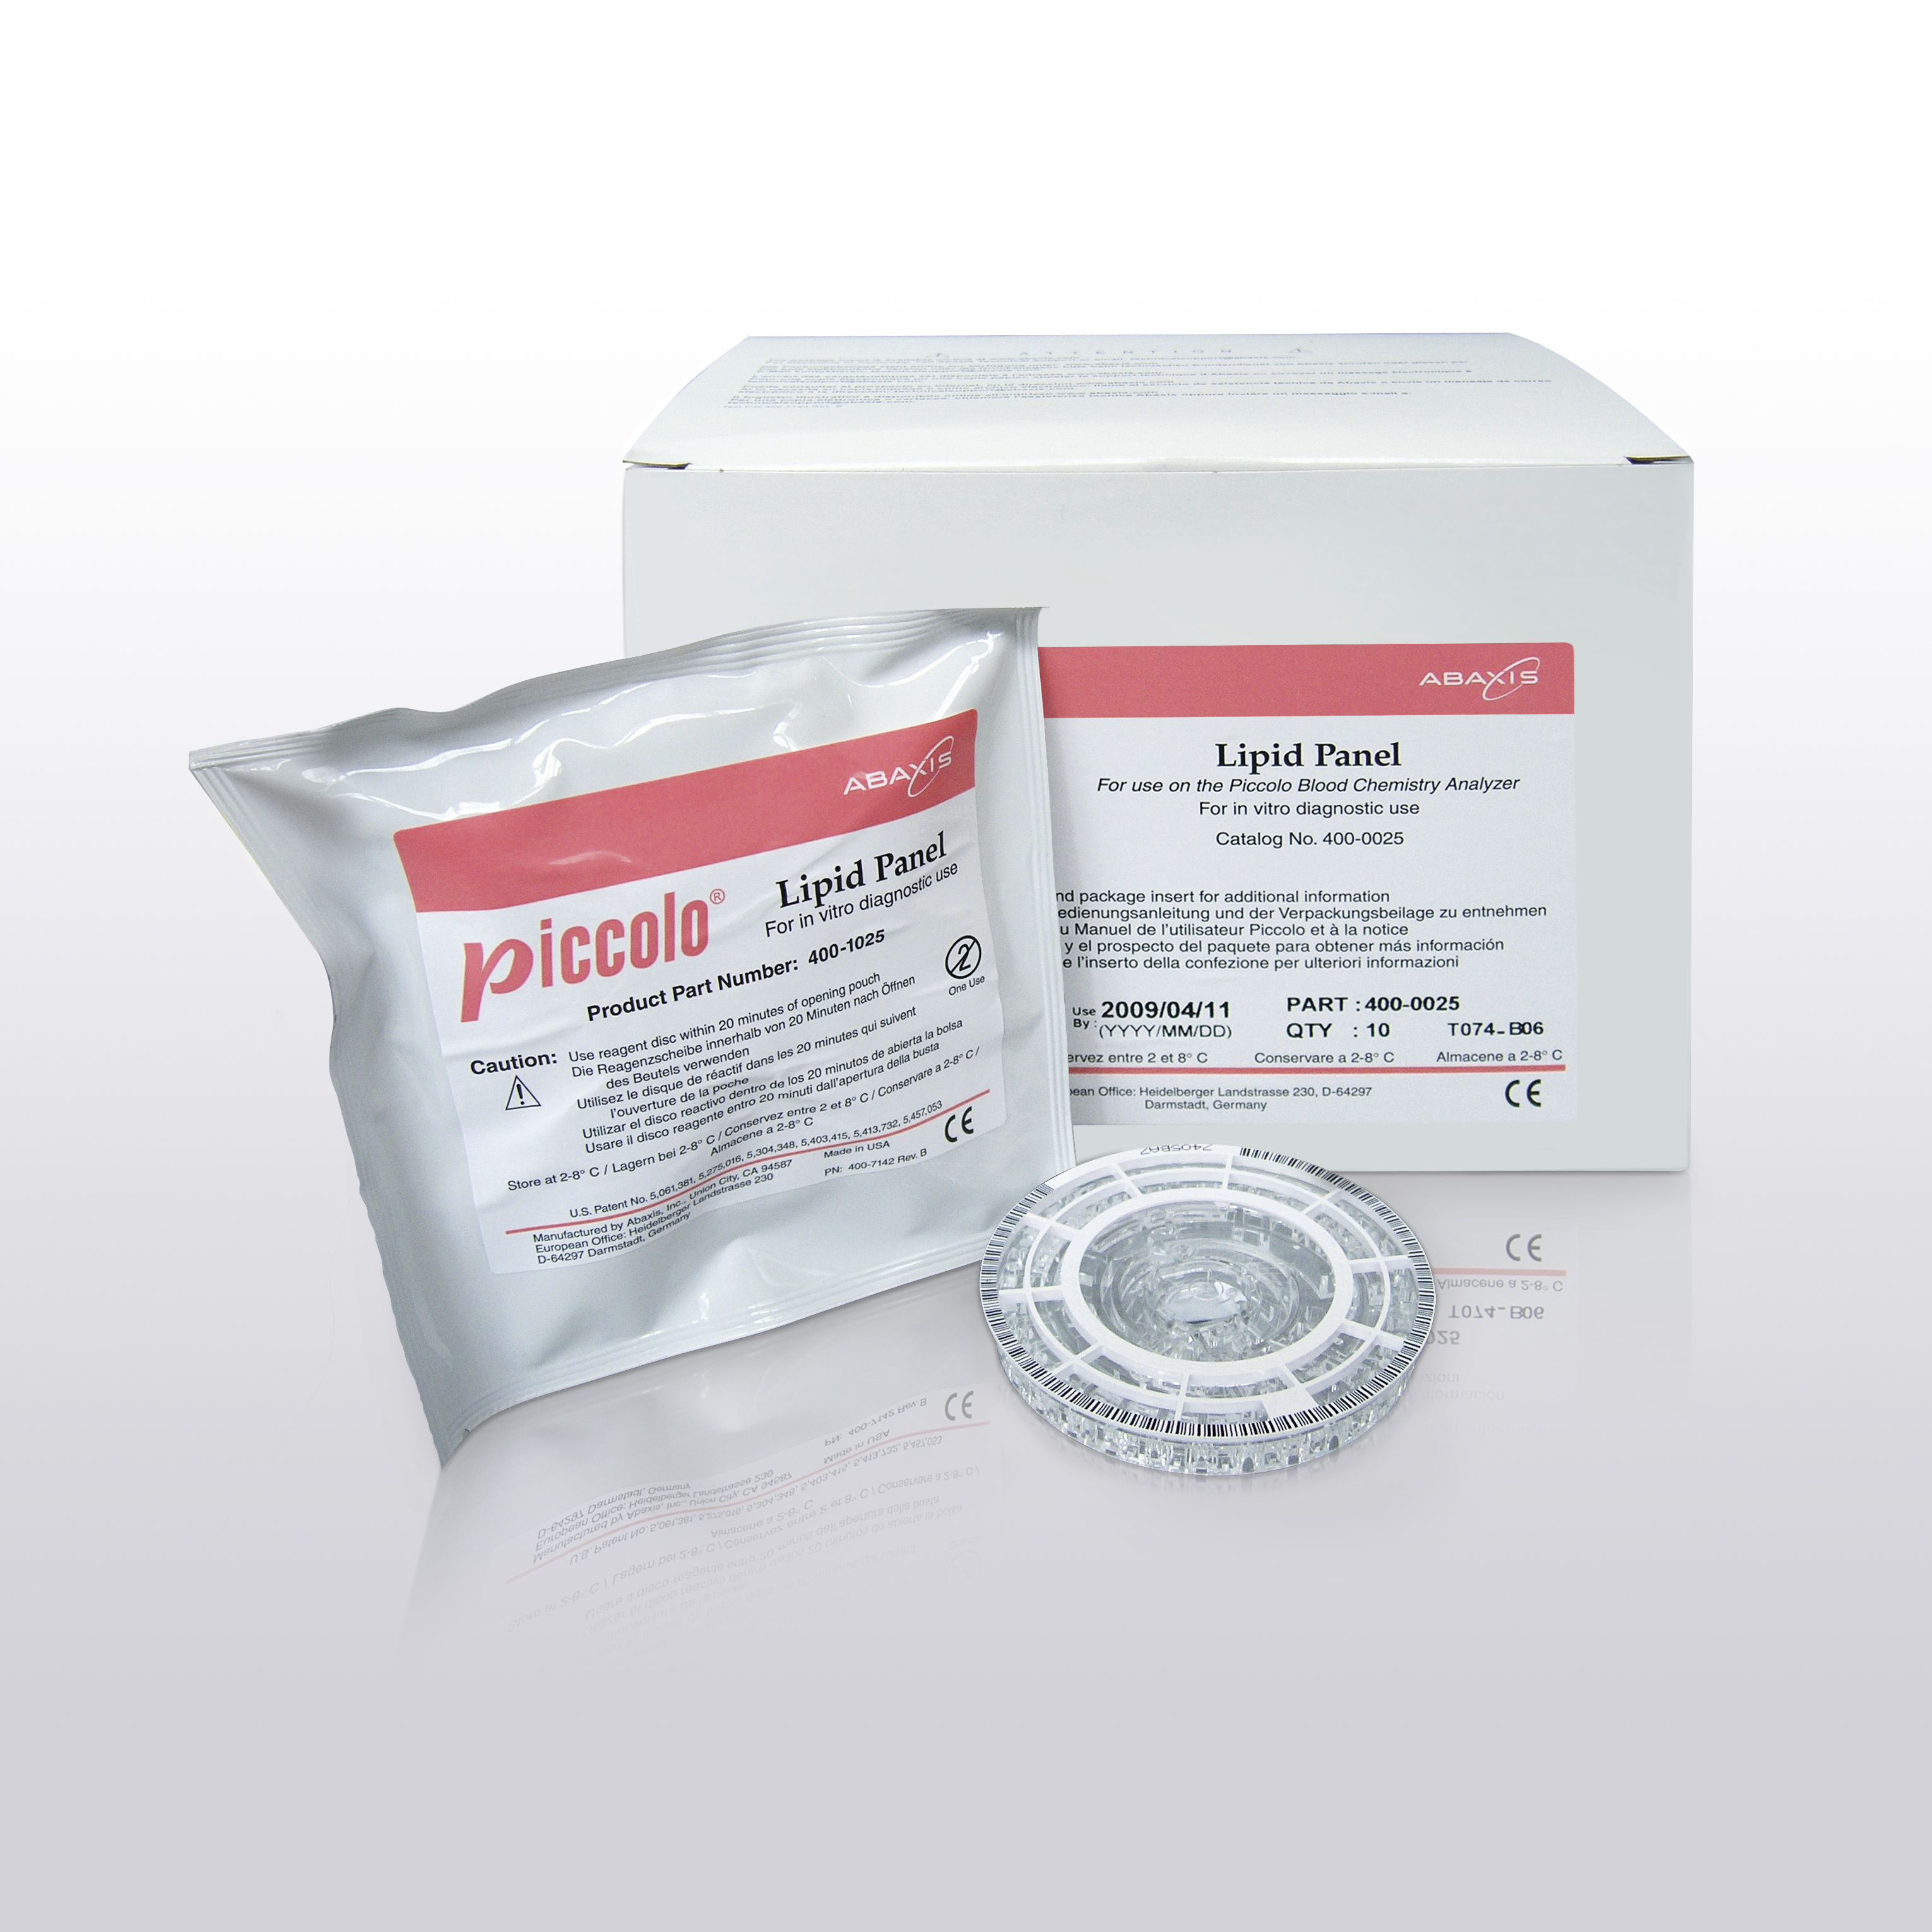 Piccolo® Lipid Panel